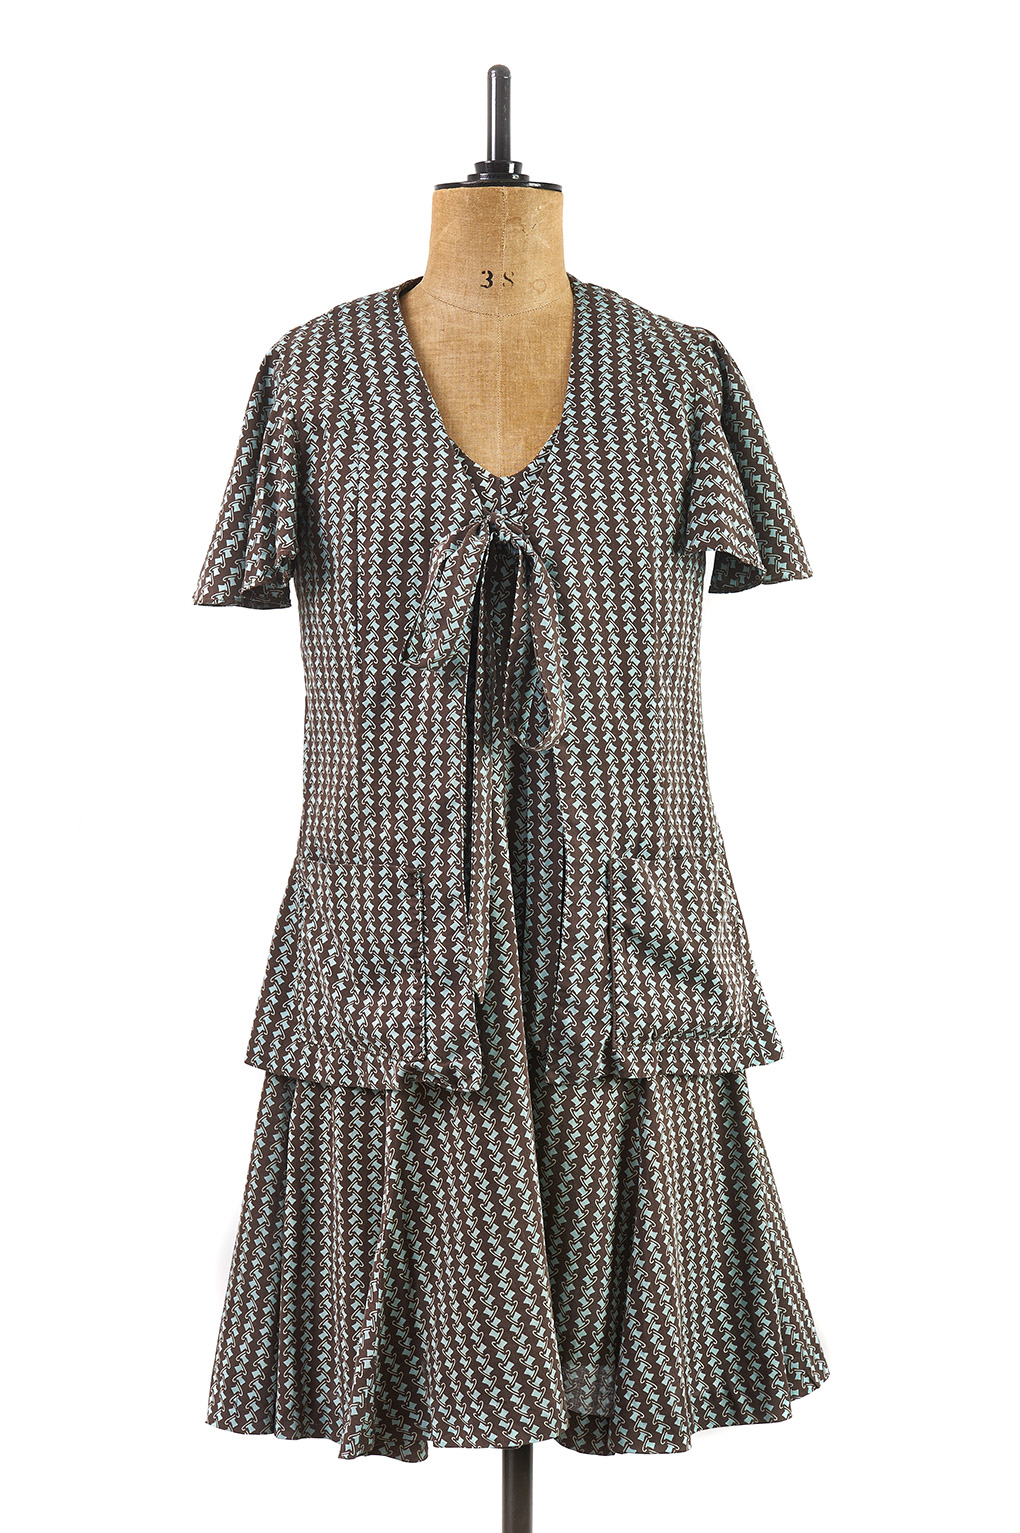 Vintage Needlecord Pinafore Dress By Laura Ashley - Margot & Hesse